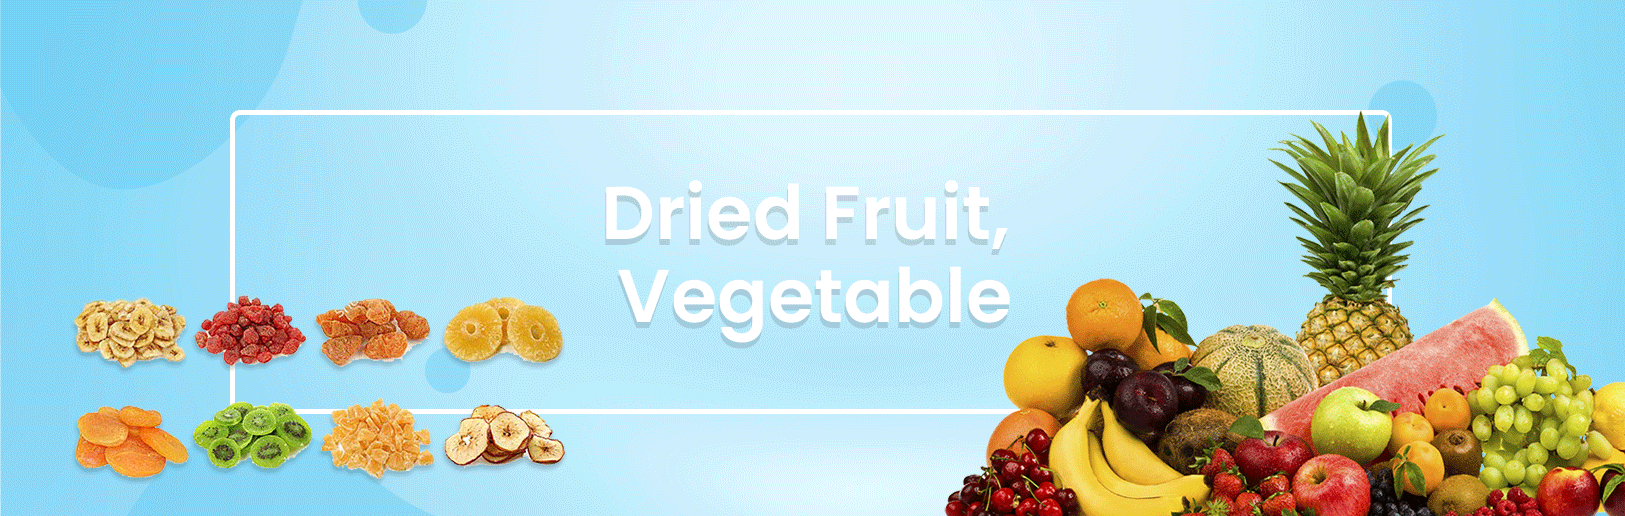 Dried Fruit, Vegetable